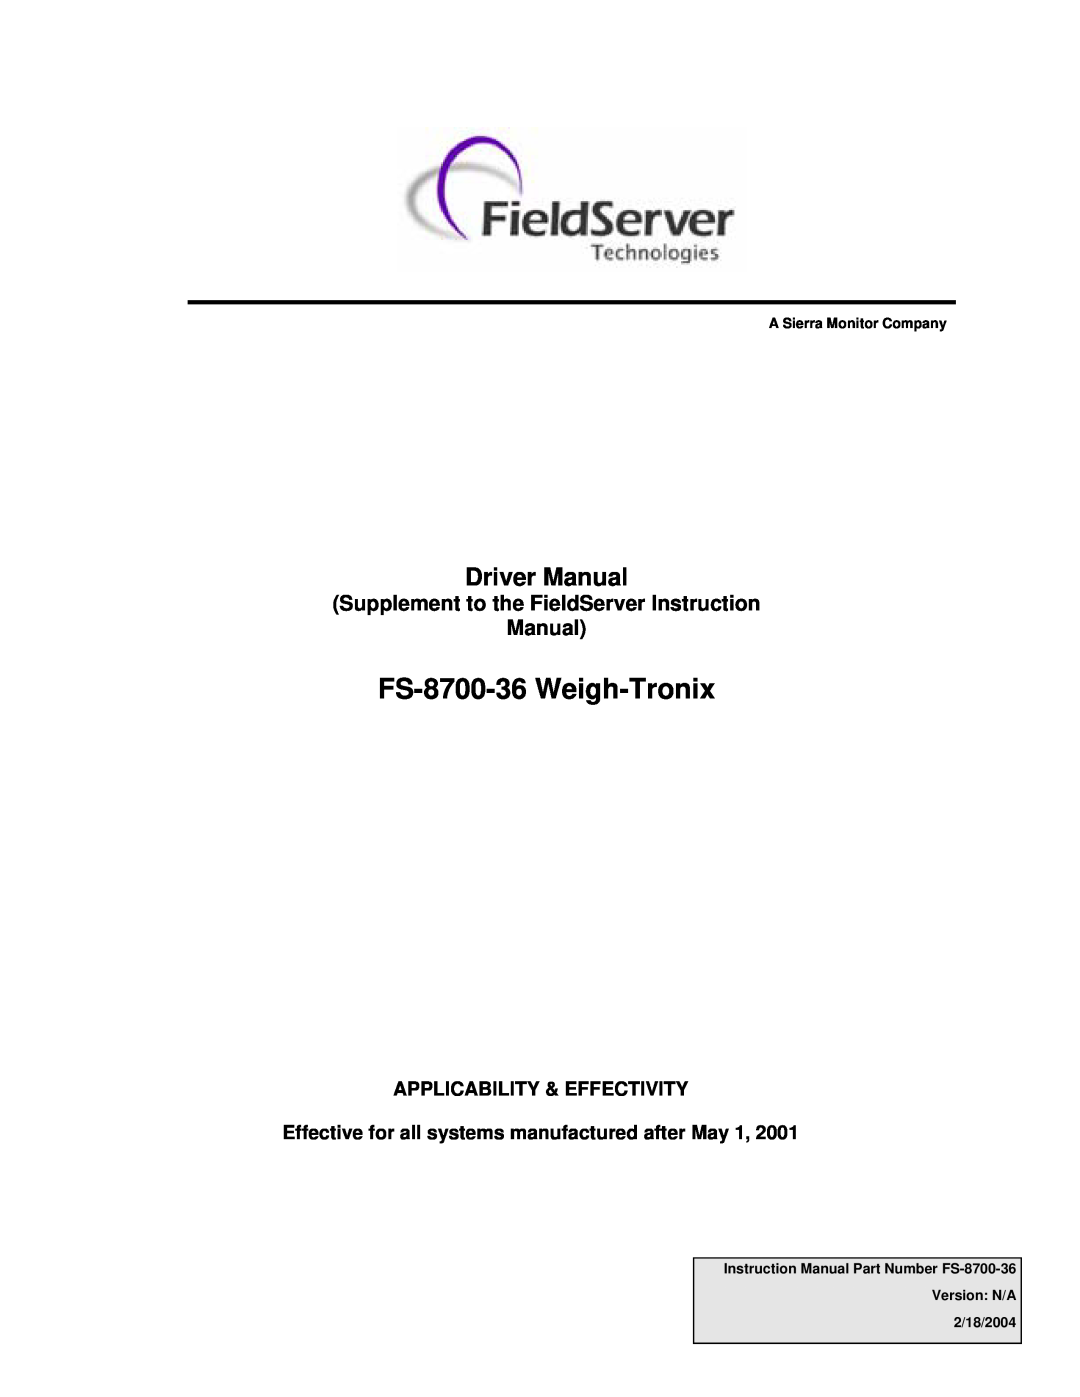 FieldServer instruction manual FS-8700-36 Weigh-Tronix, Driver Manual, Applicability & Effectivity 